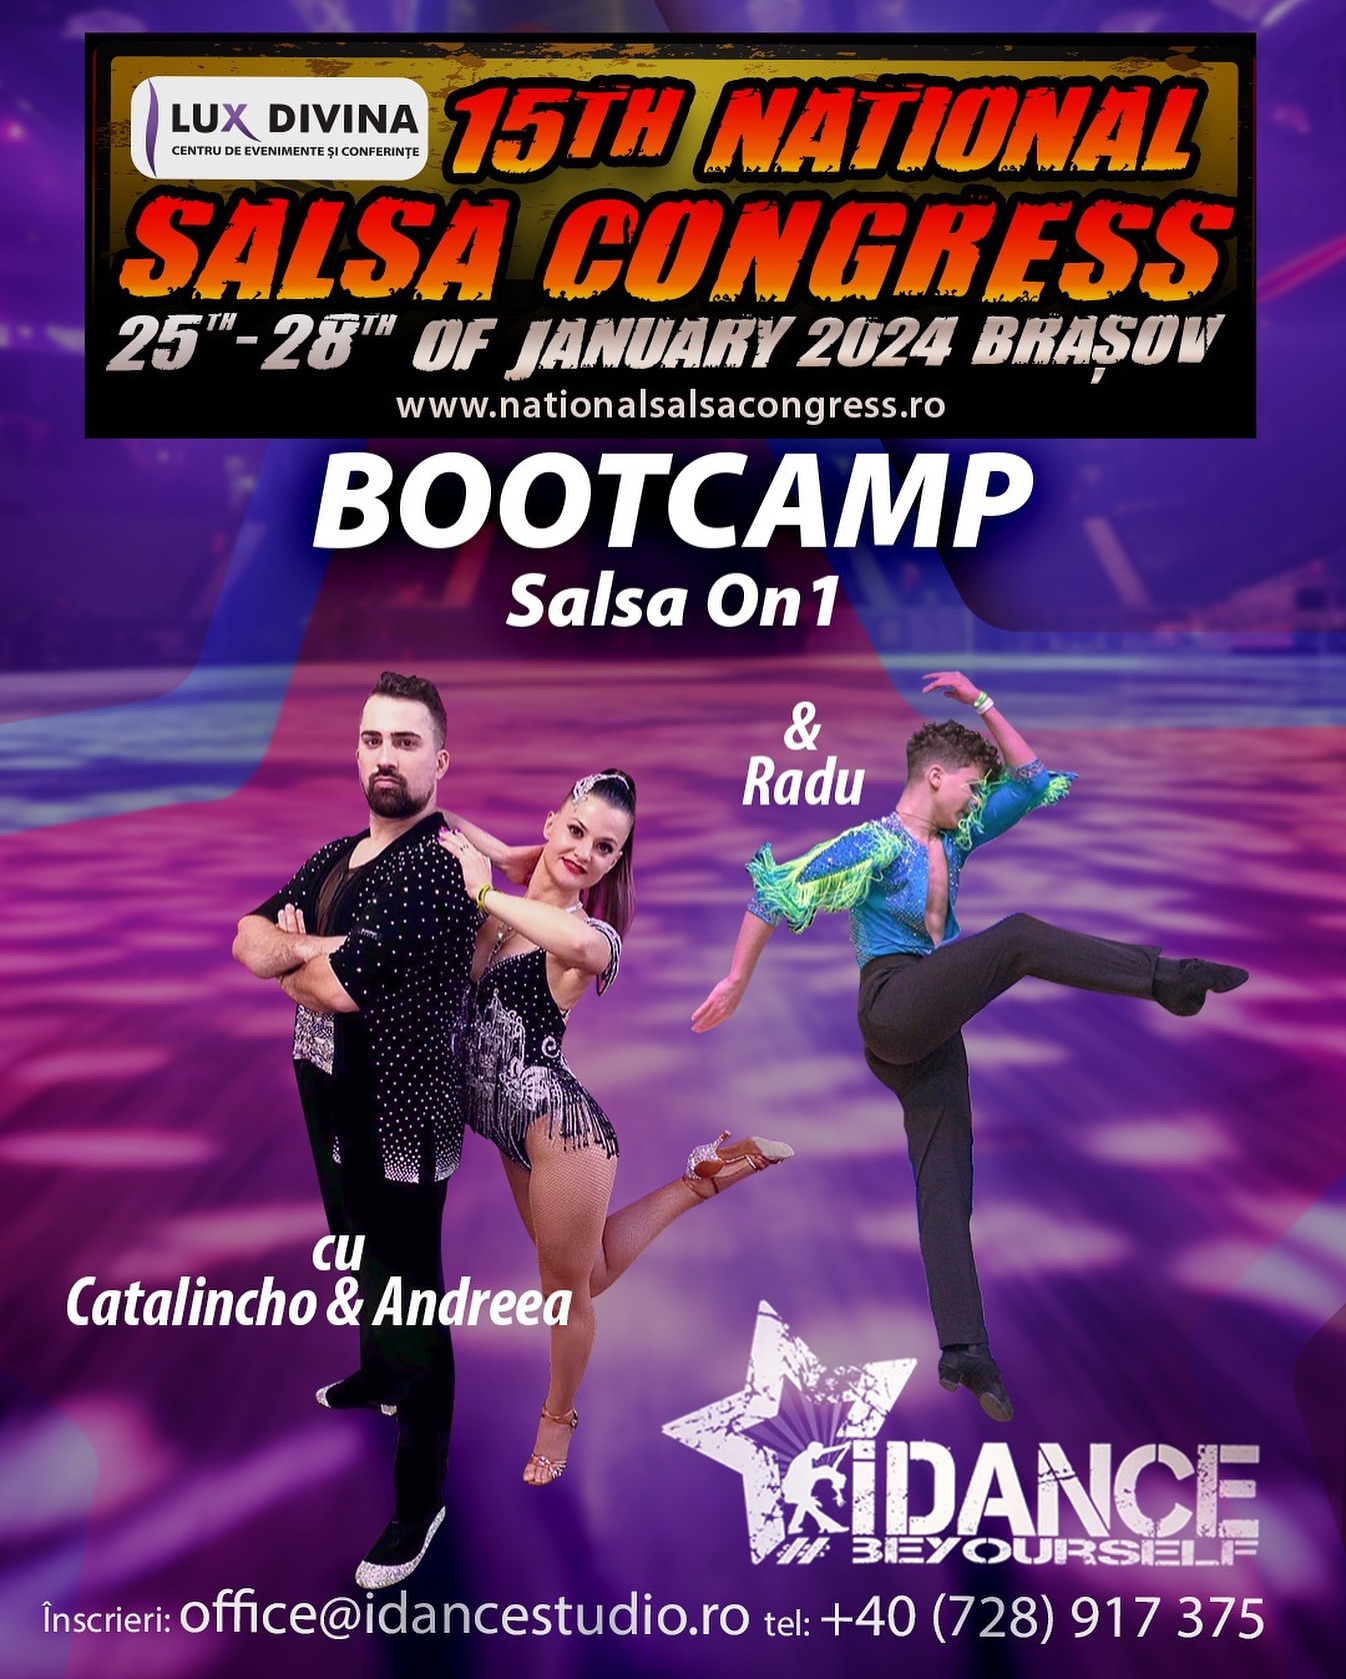 Bootcamp Salsa on1 cu Catalincho, Andreea si Radu